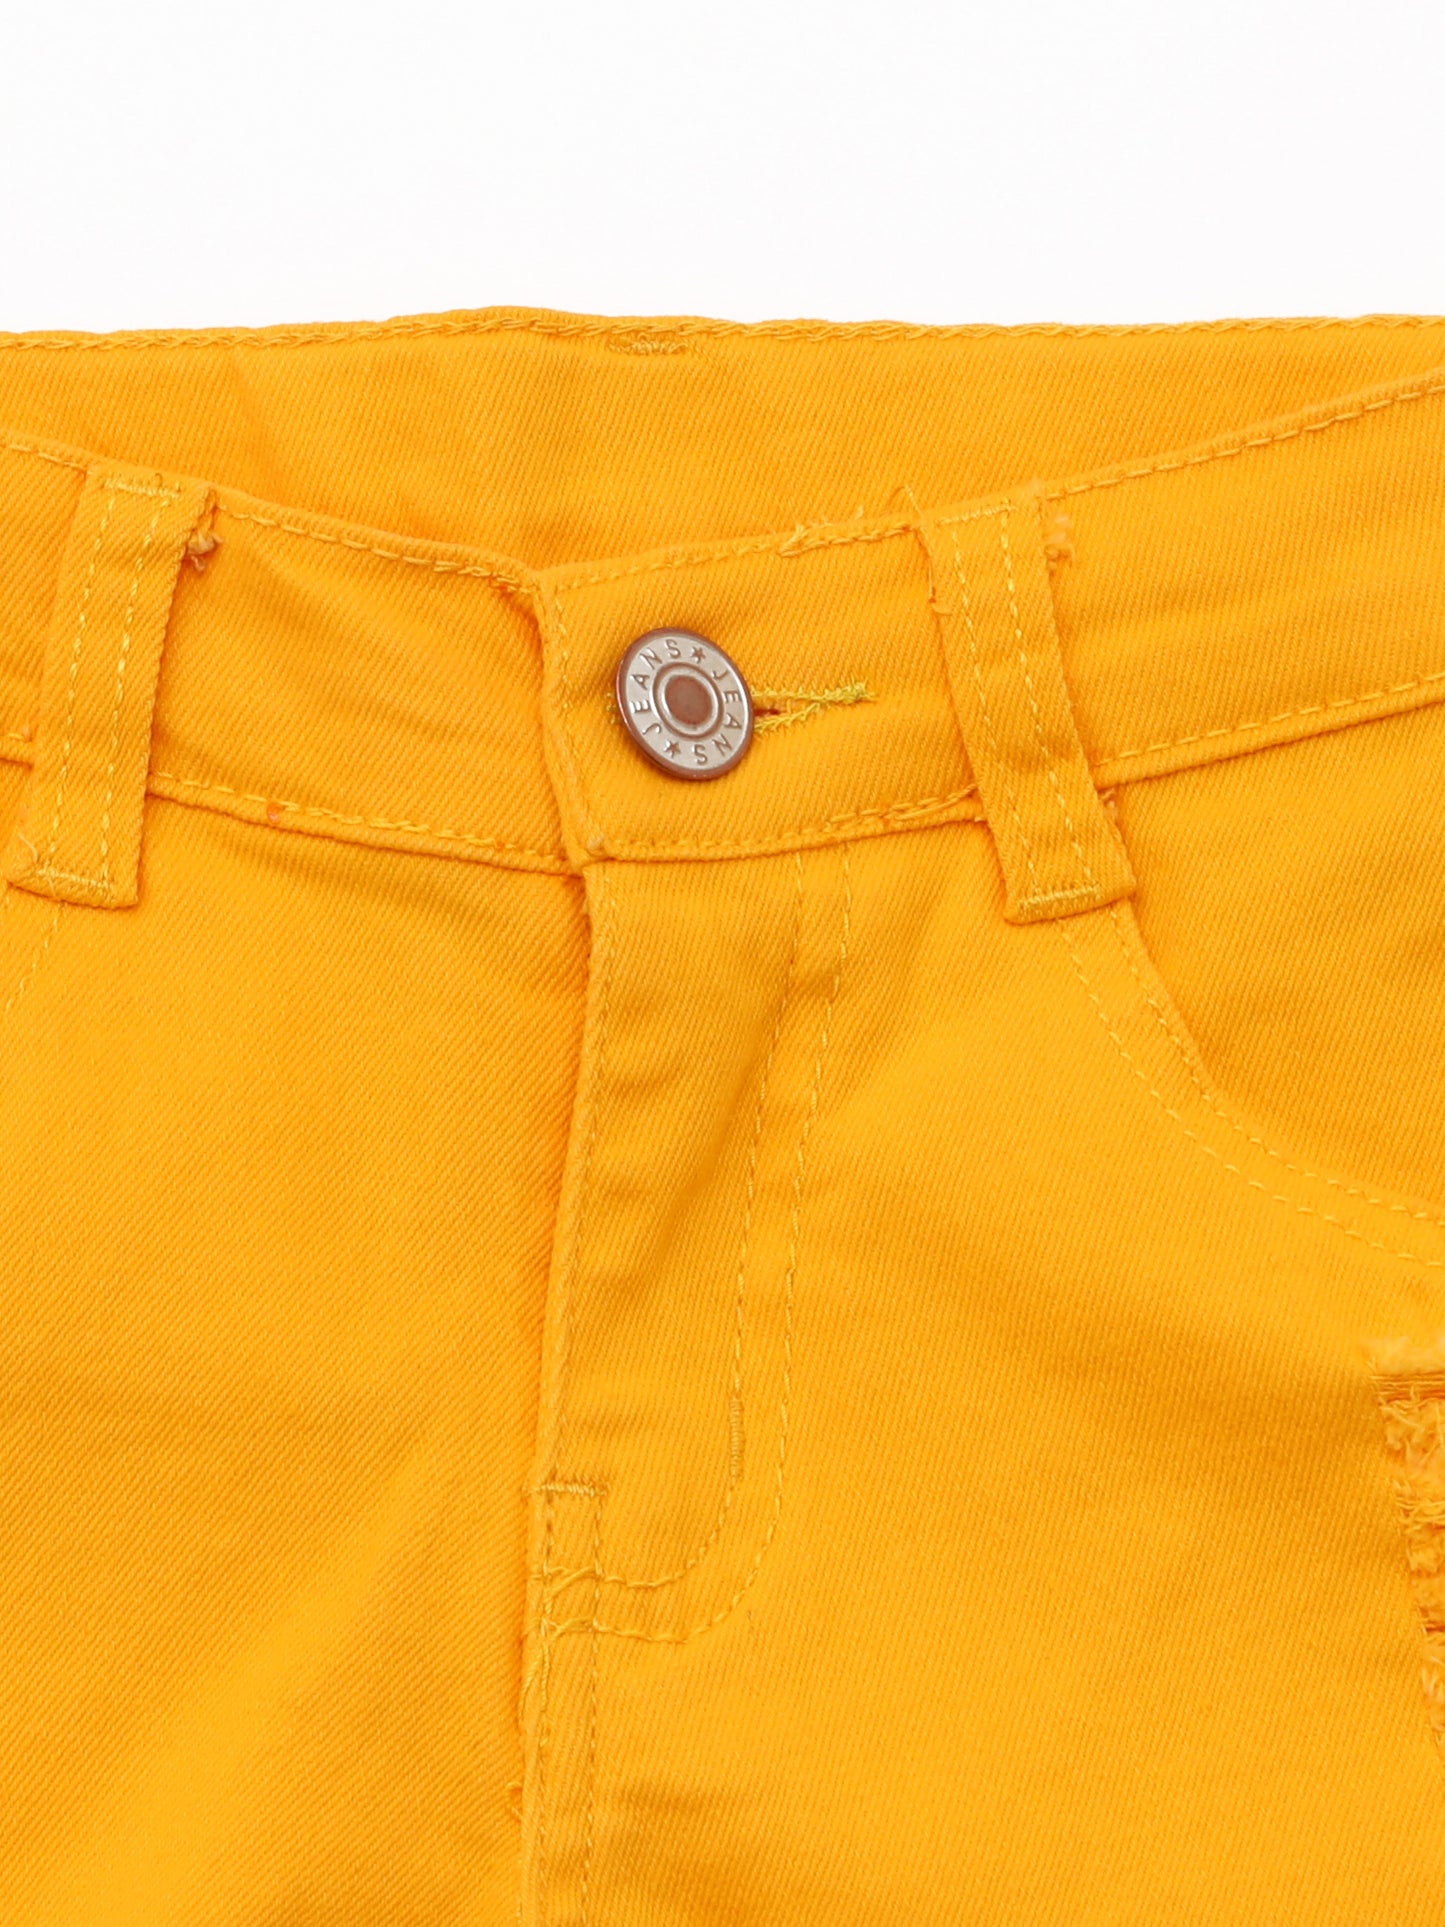 Yellow Distressed Hem Denim Shorts